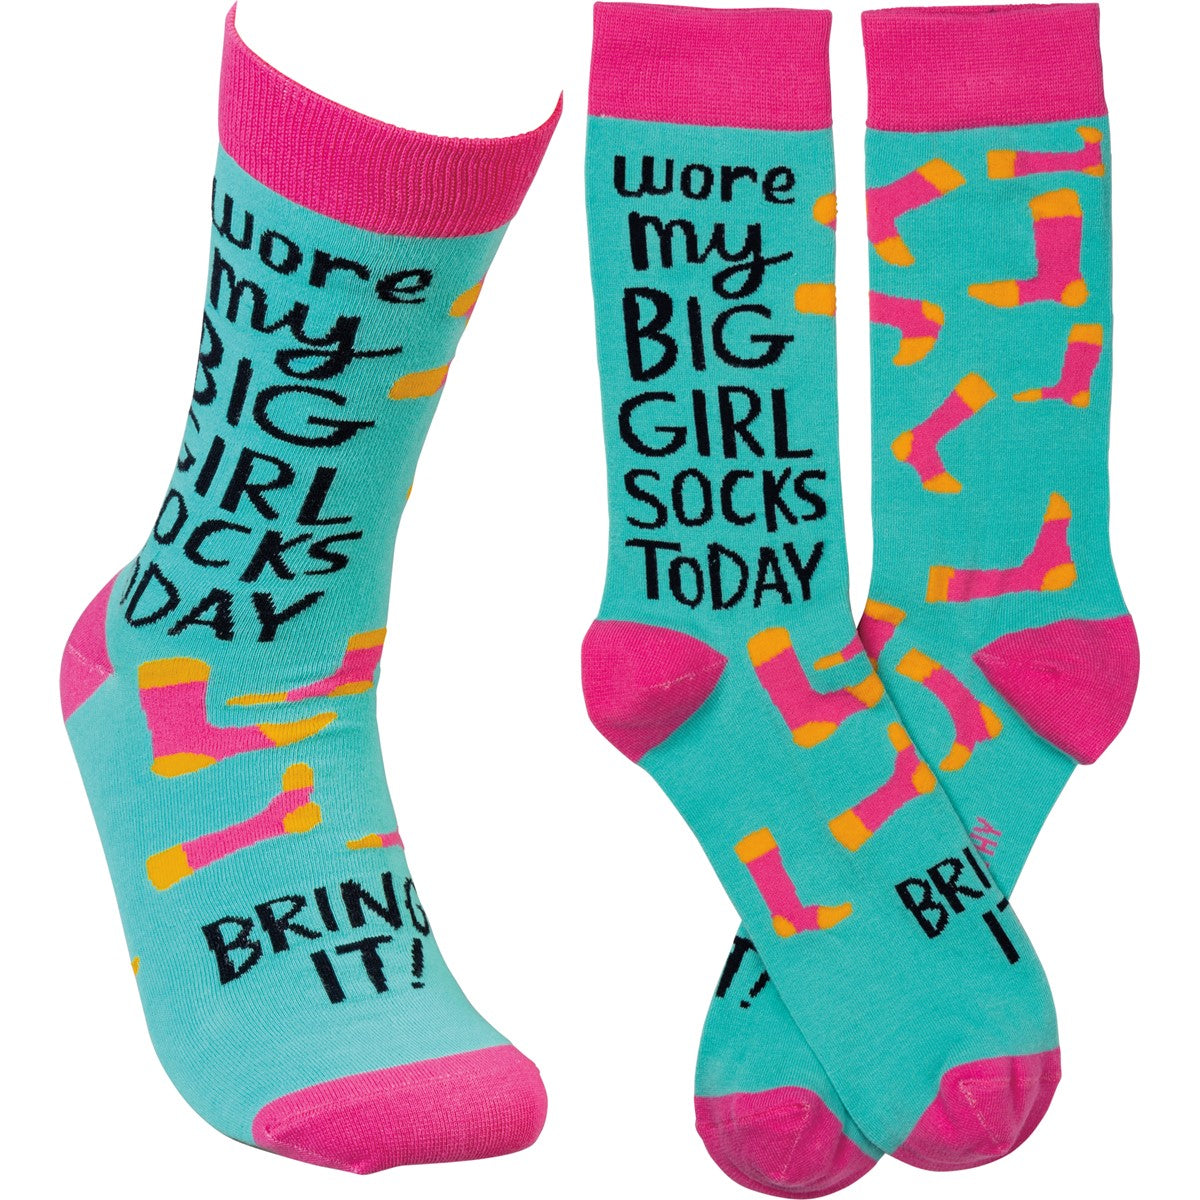 Big Girl Socks